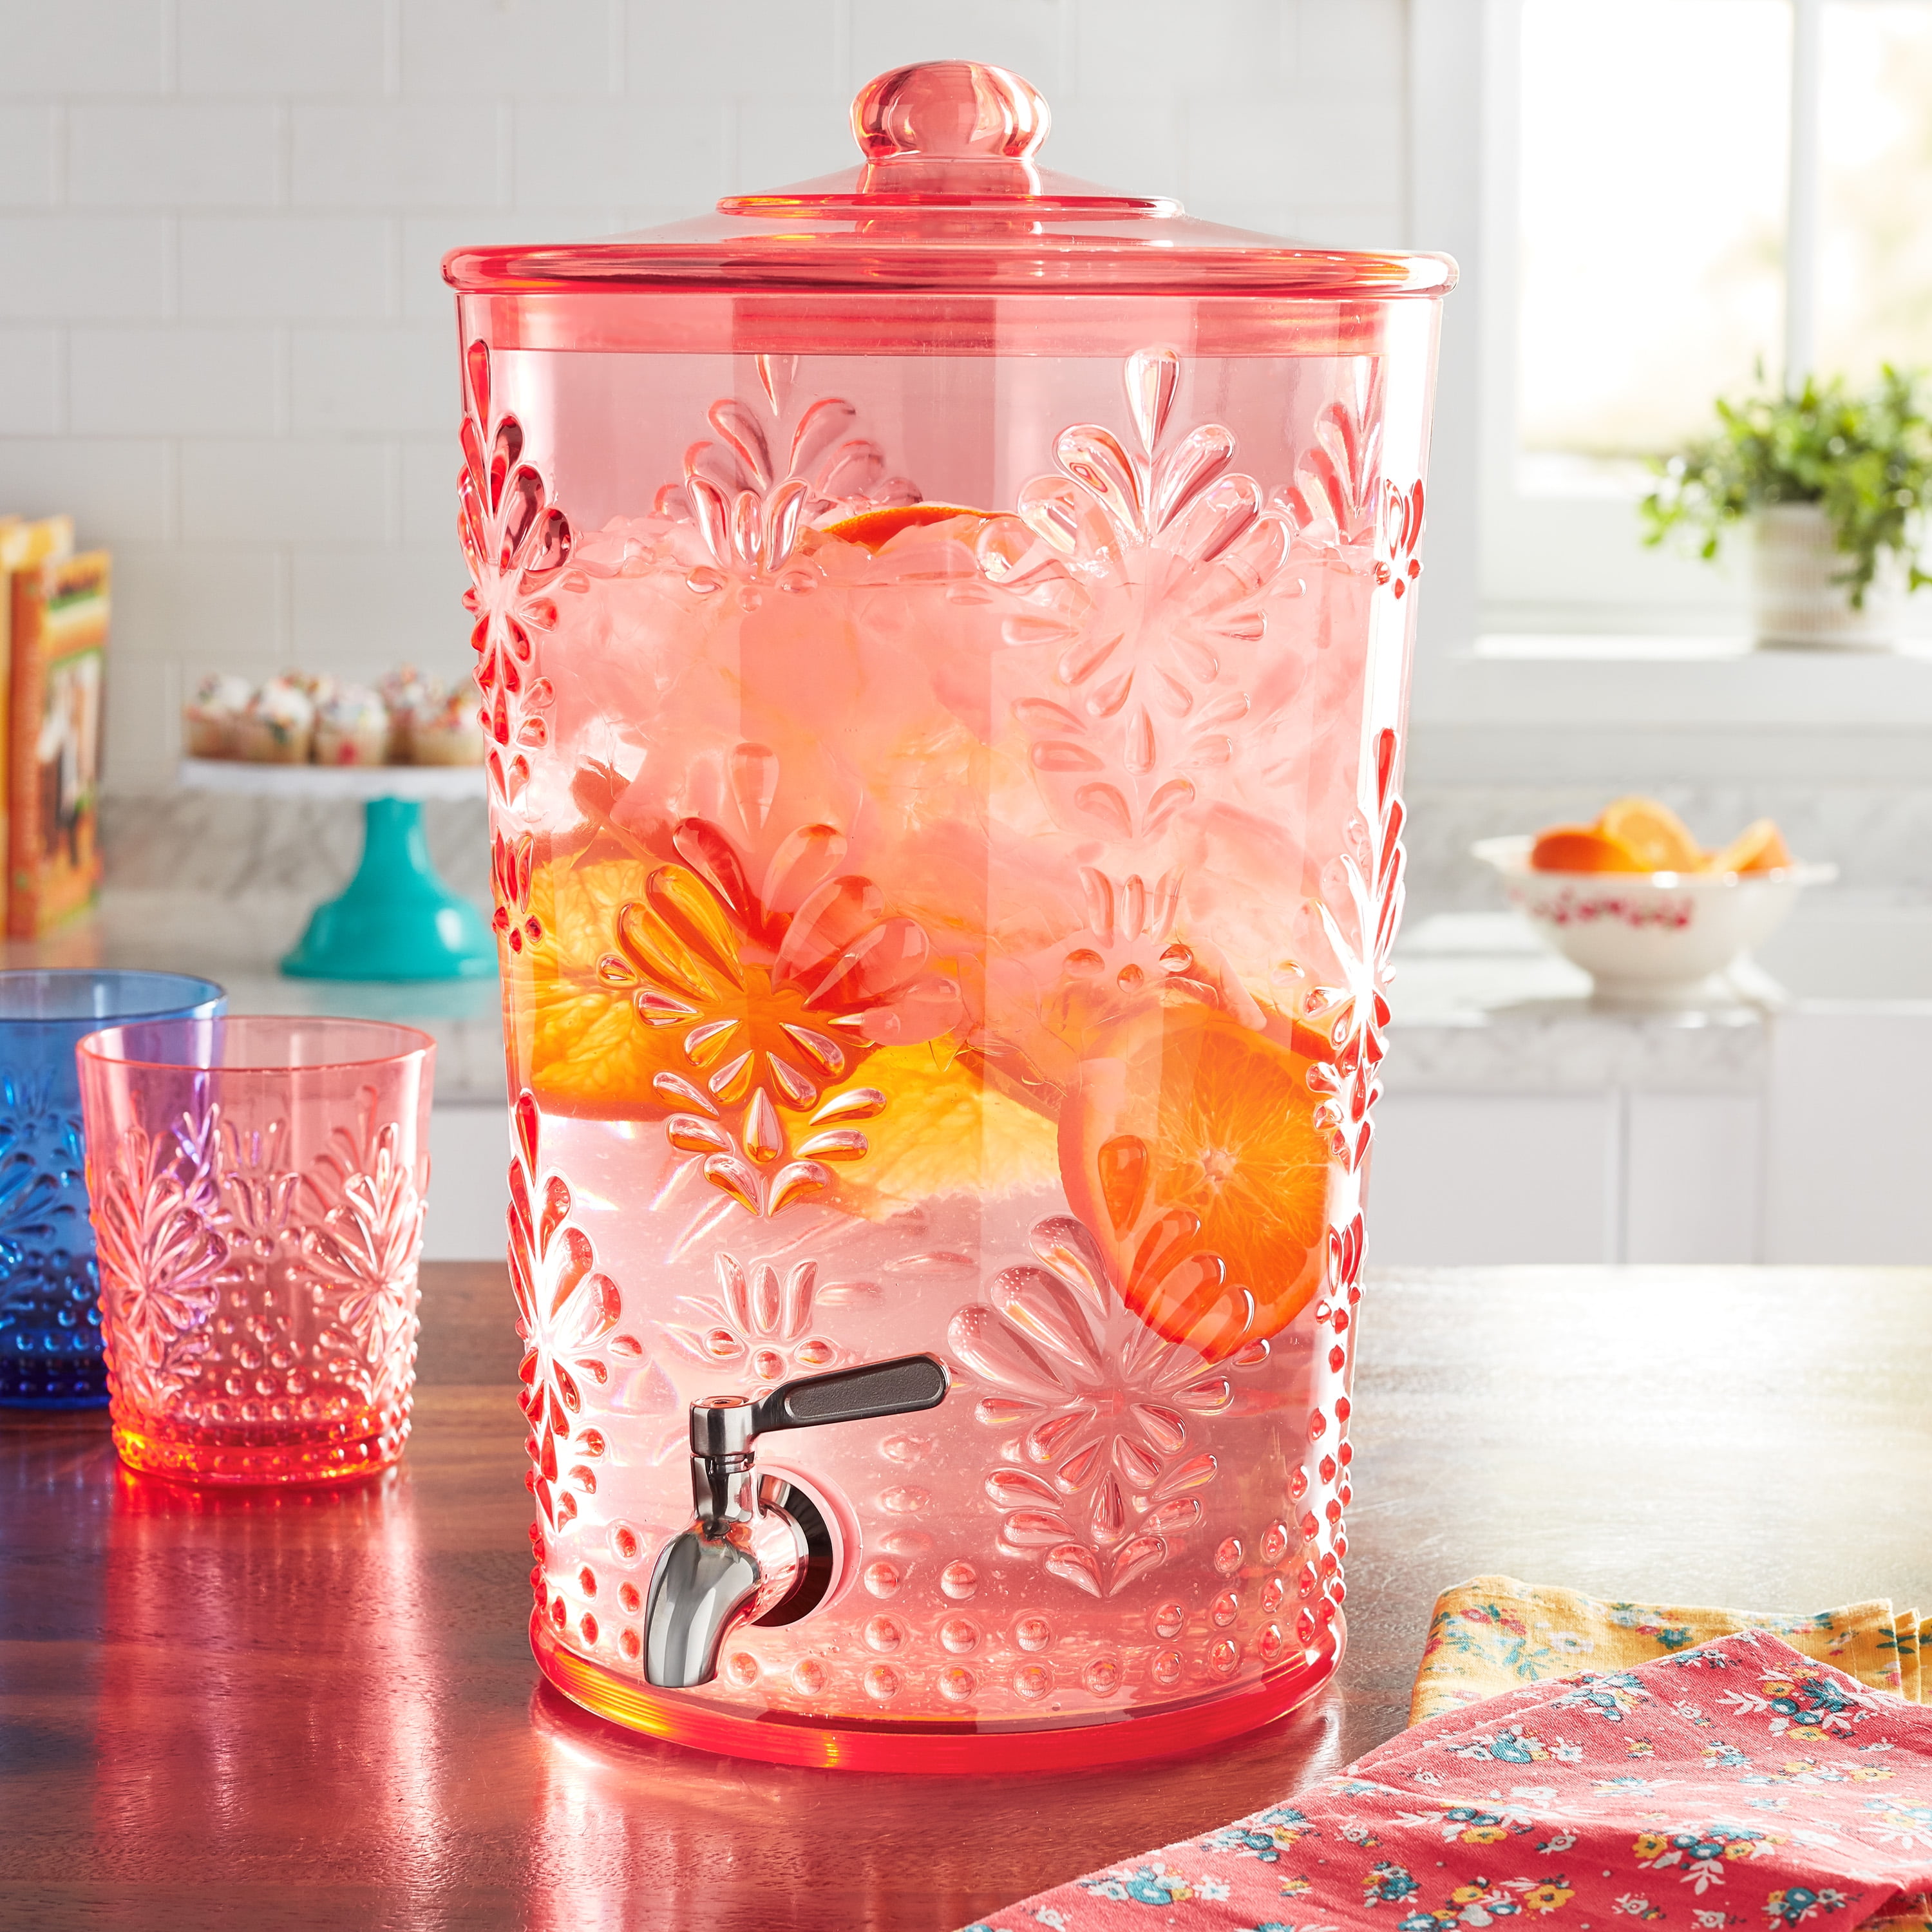 Clear Plastic Sun Tea Jar Beverage Dispenser 1.2 Gallon Pink Fruit